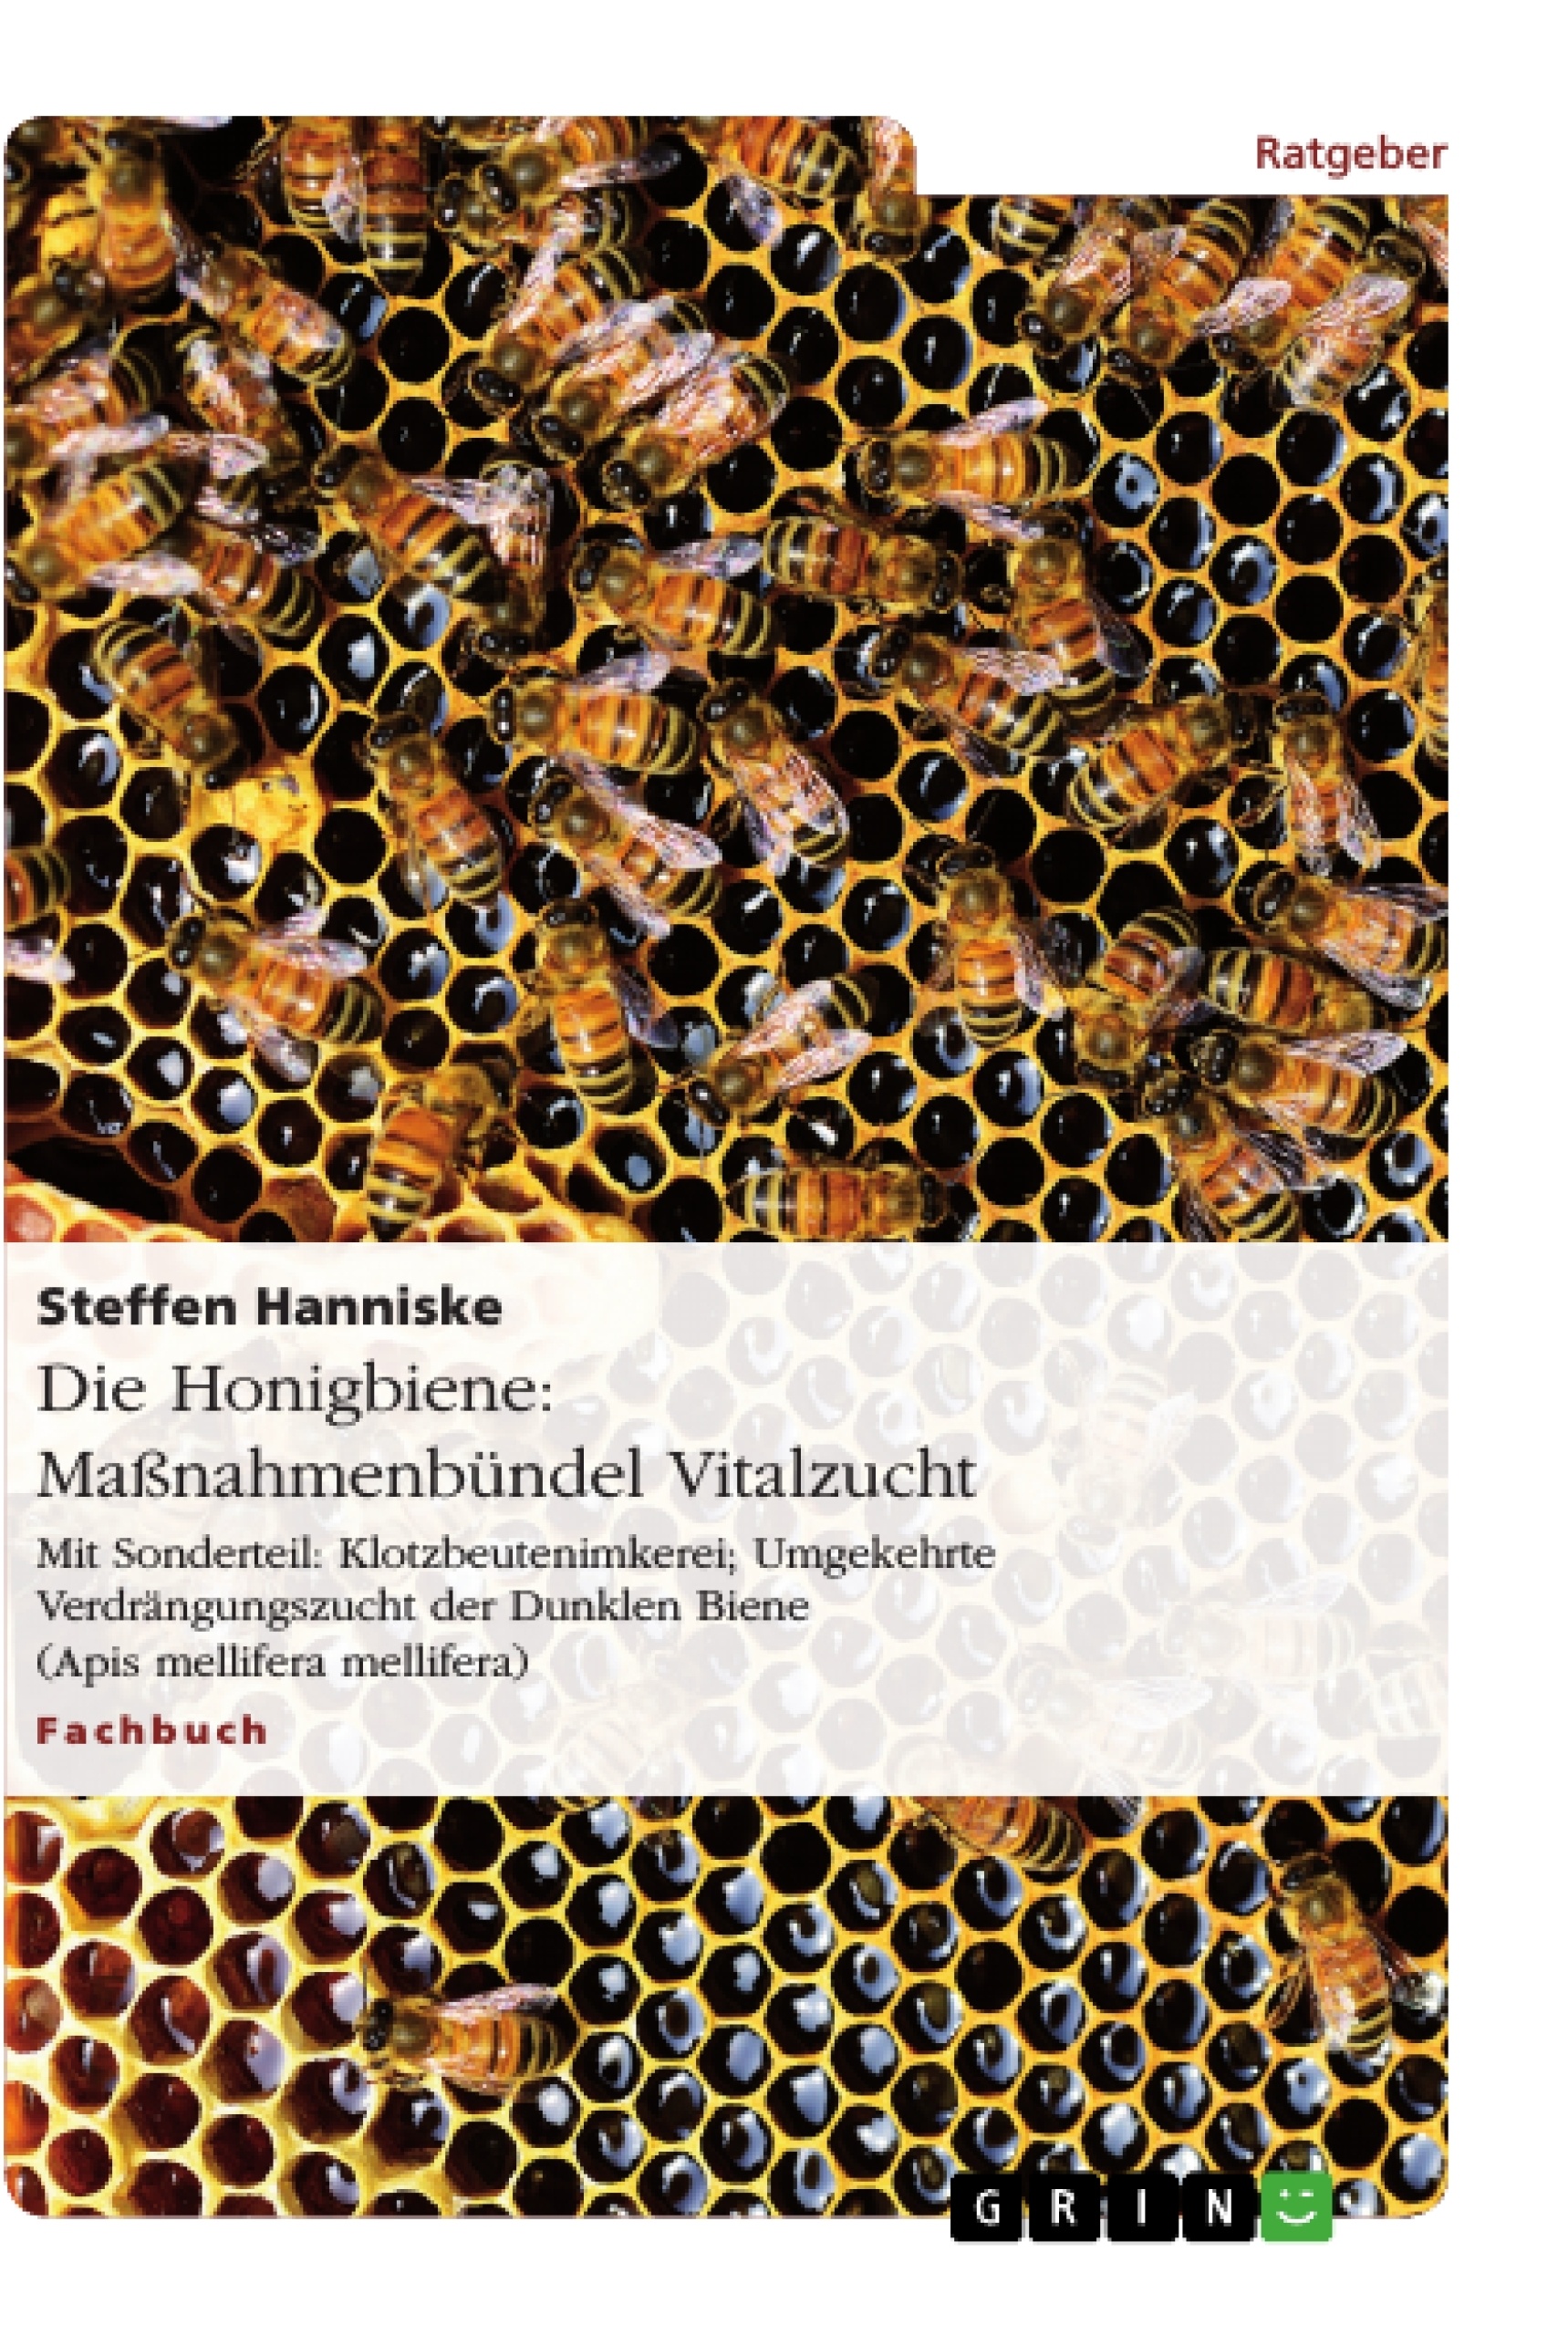 Título: Die Honigbiene: Maßnahmenbündel Vitalzucht